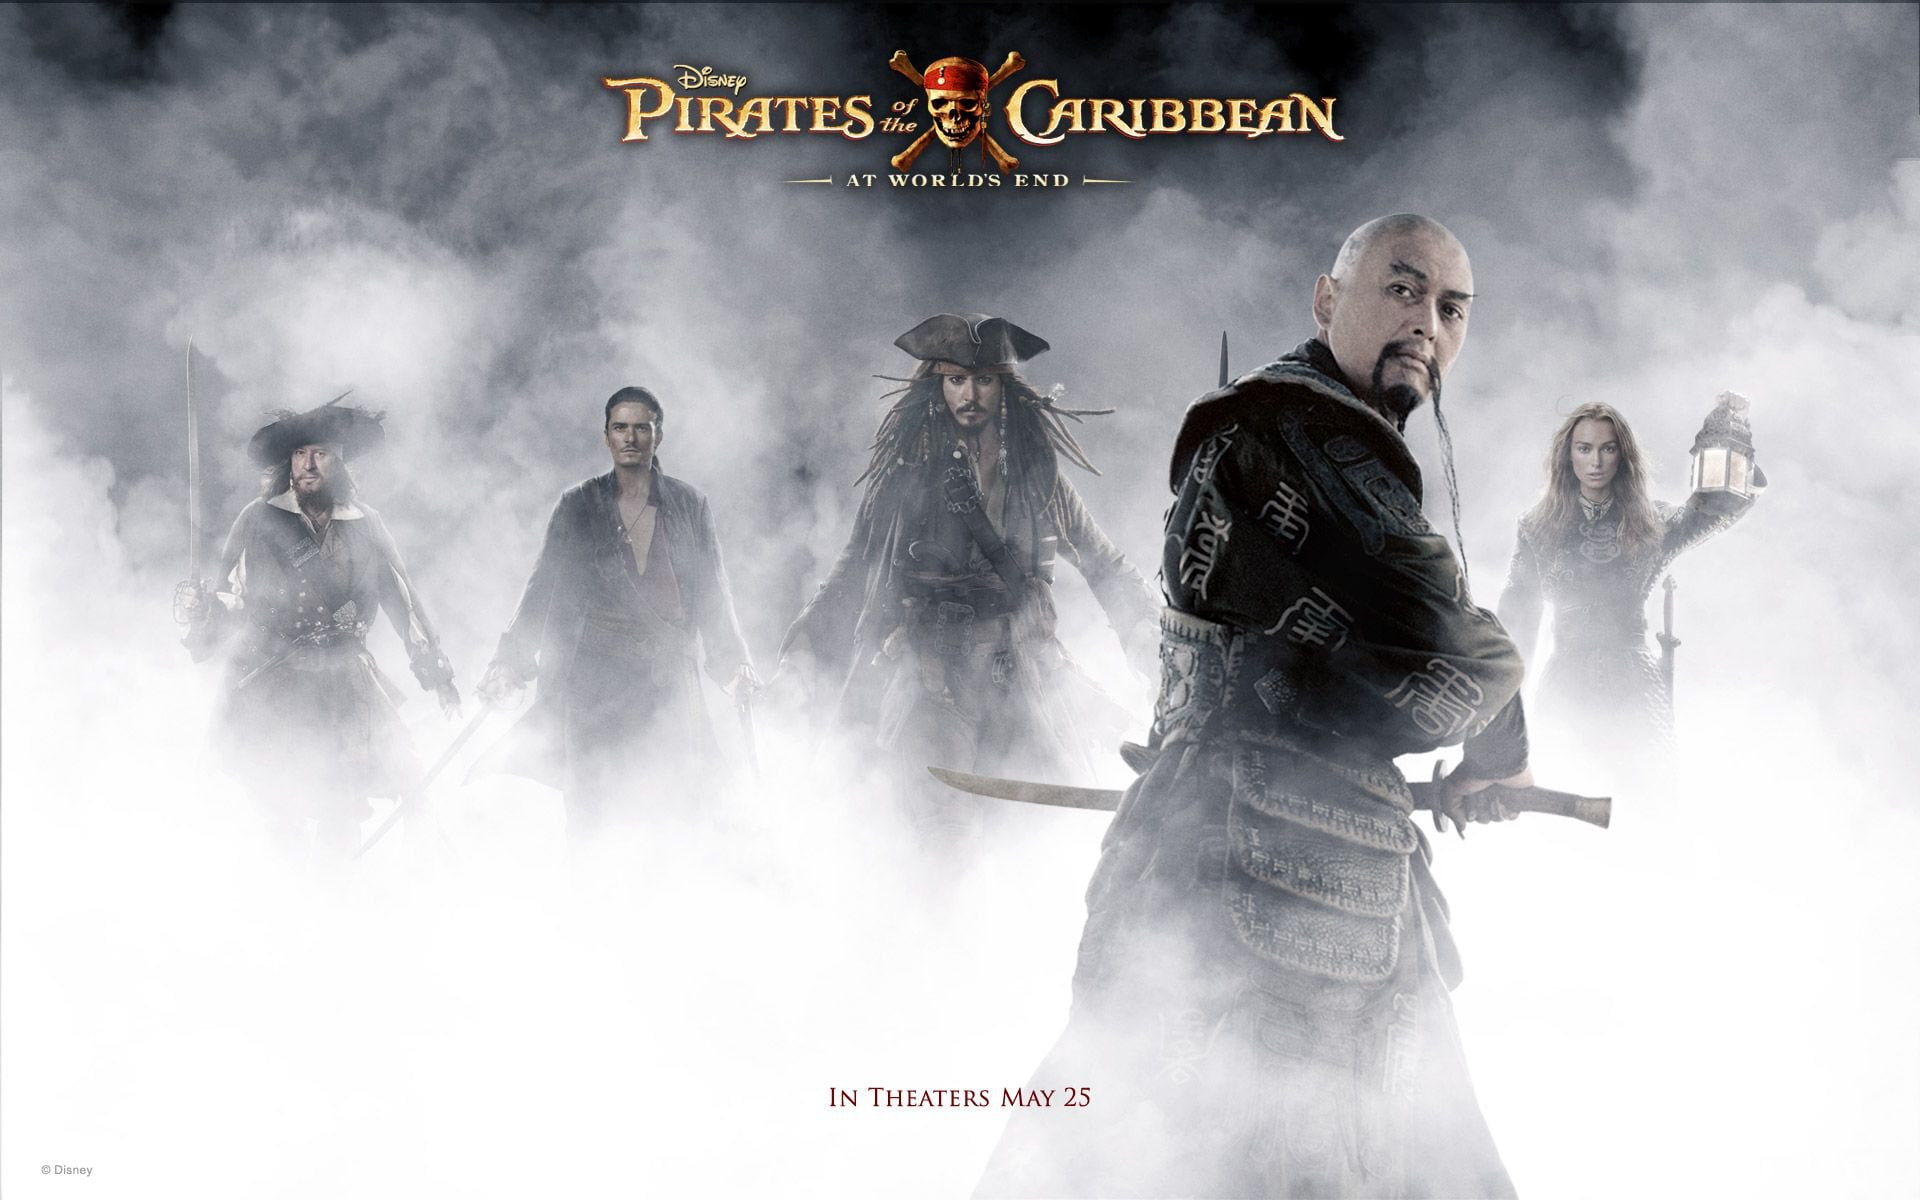 Disney Pirates of the Caribbean digital wallpaper, Pirates Of The Caribbean: At World's End